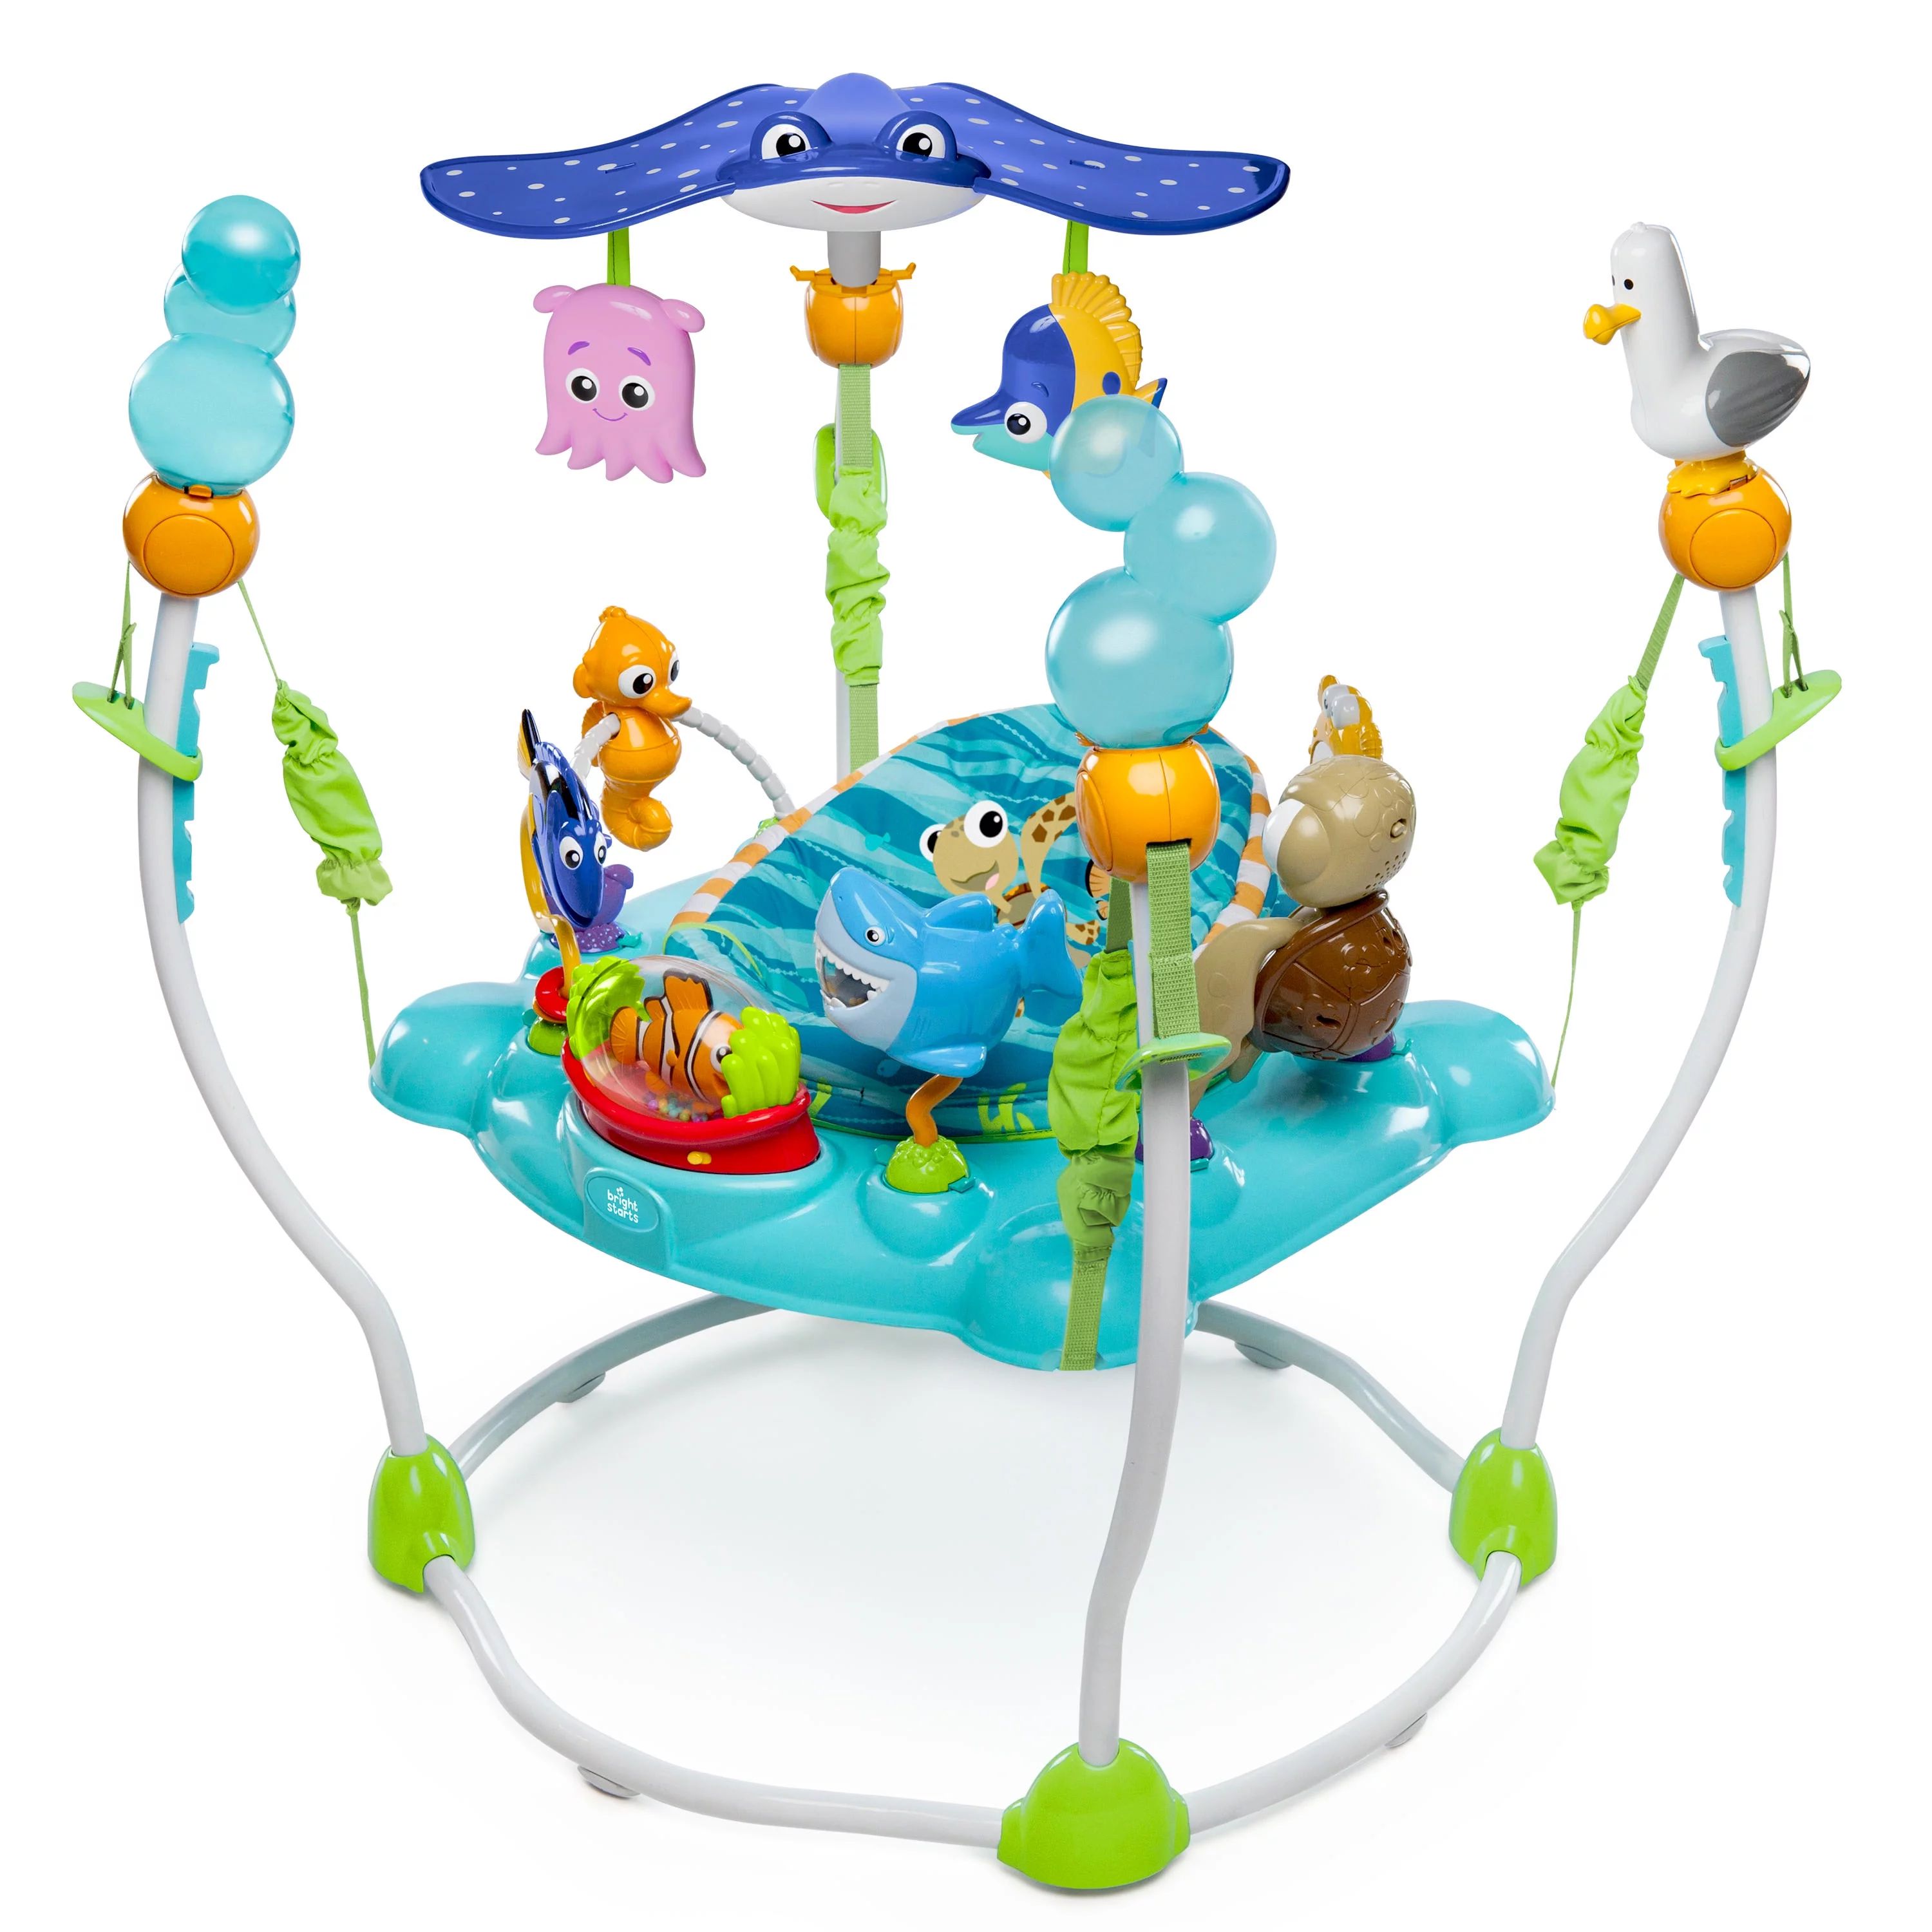 Disney Baby Finding Nemo Adjustable Baby Activity Station Jumper by Bright Starts | Walmart (US)